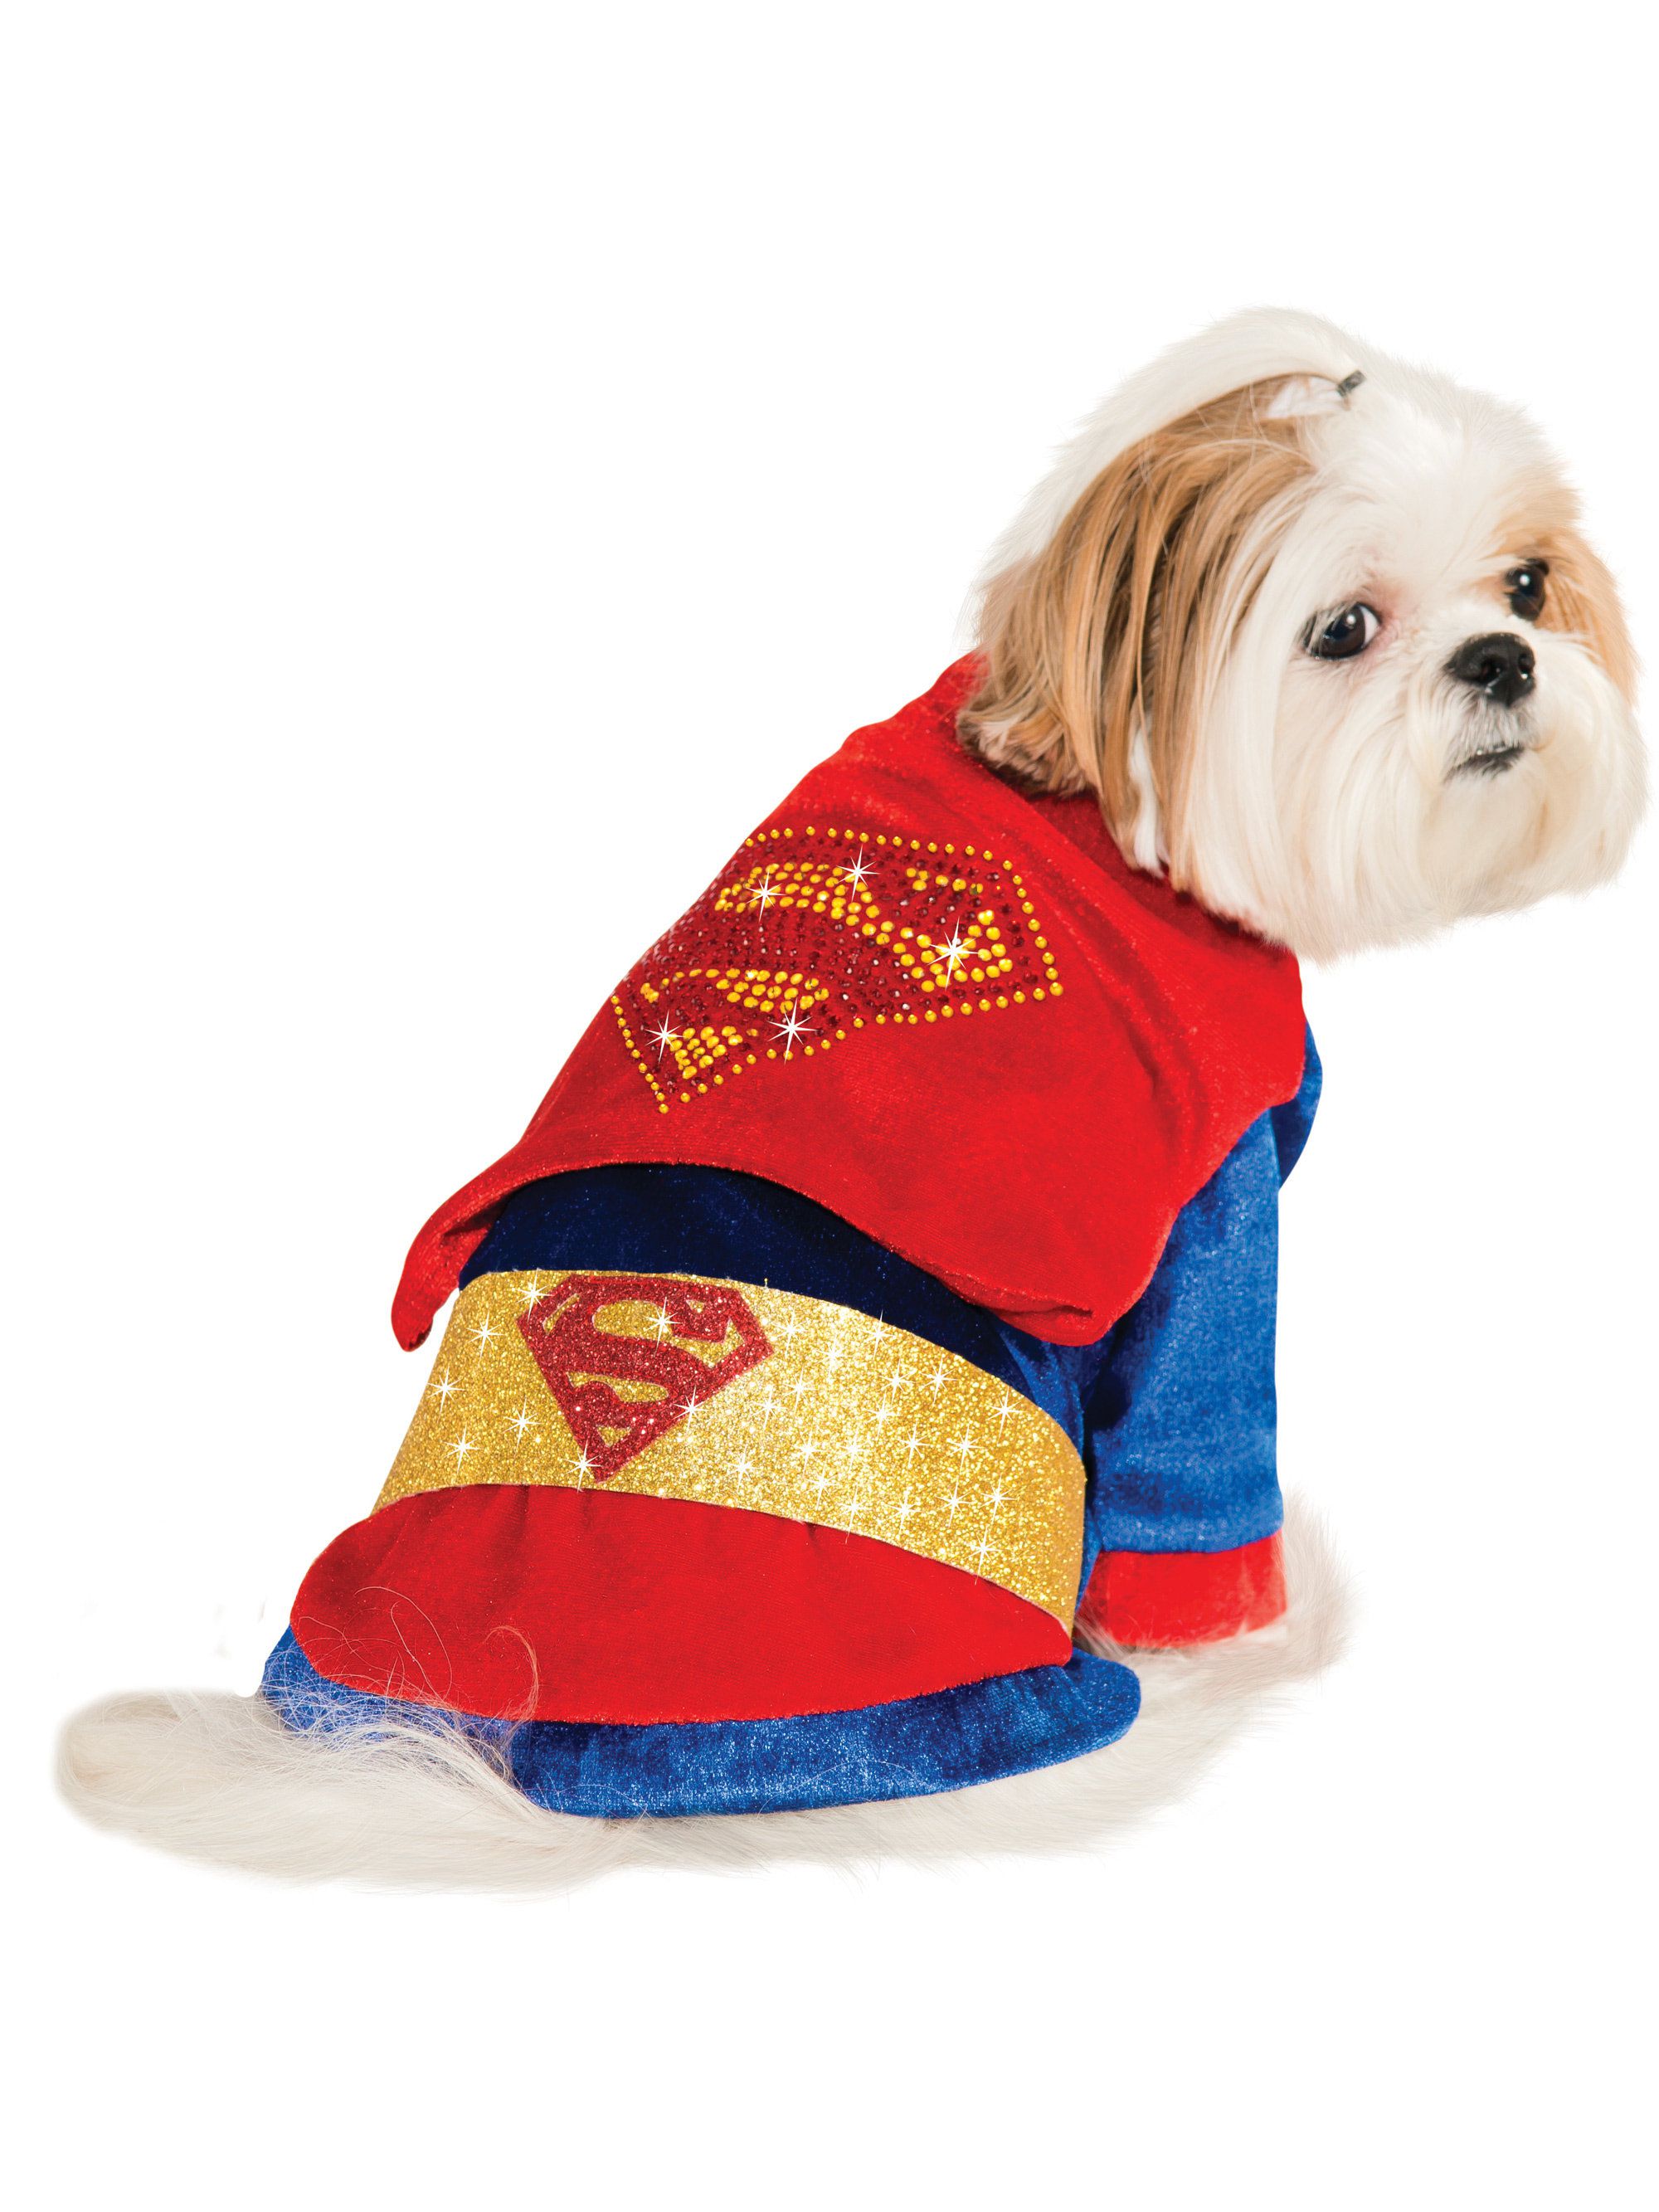 Pet's Justice League Superman Costume - costumes.com